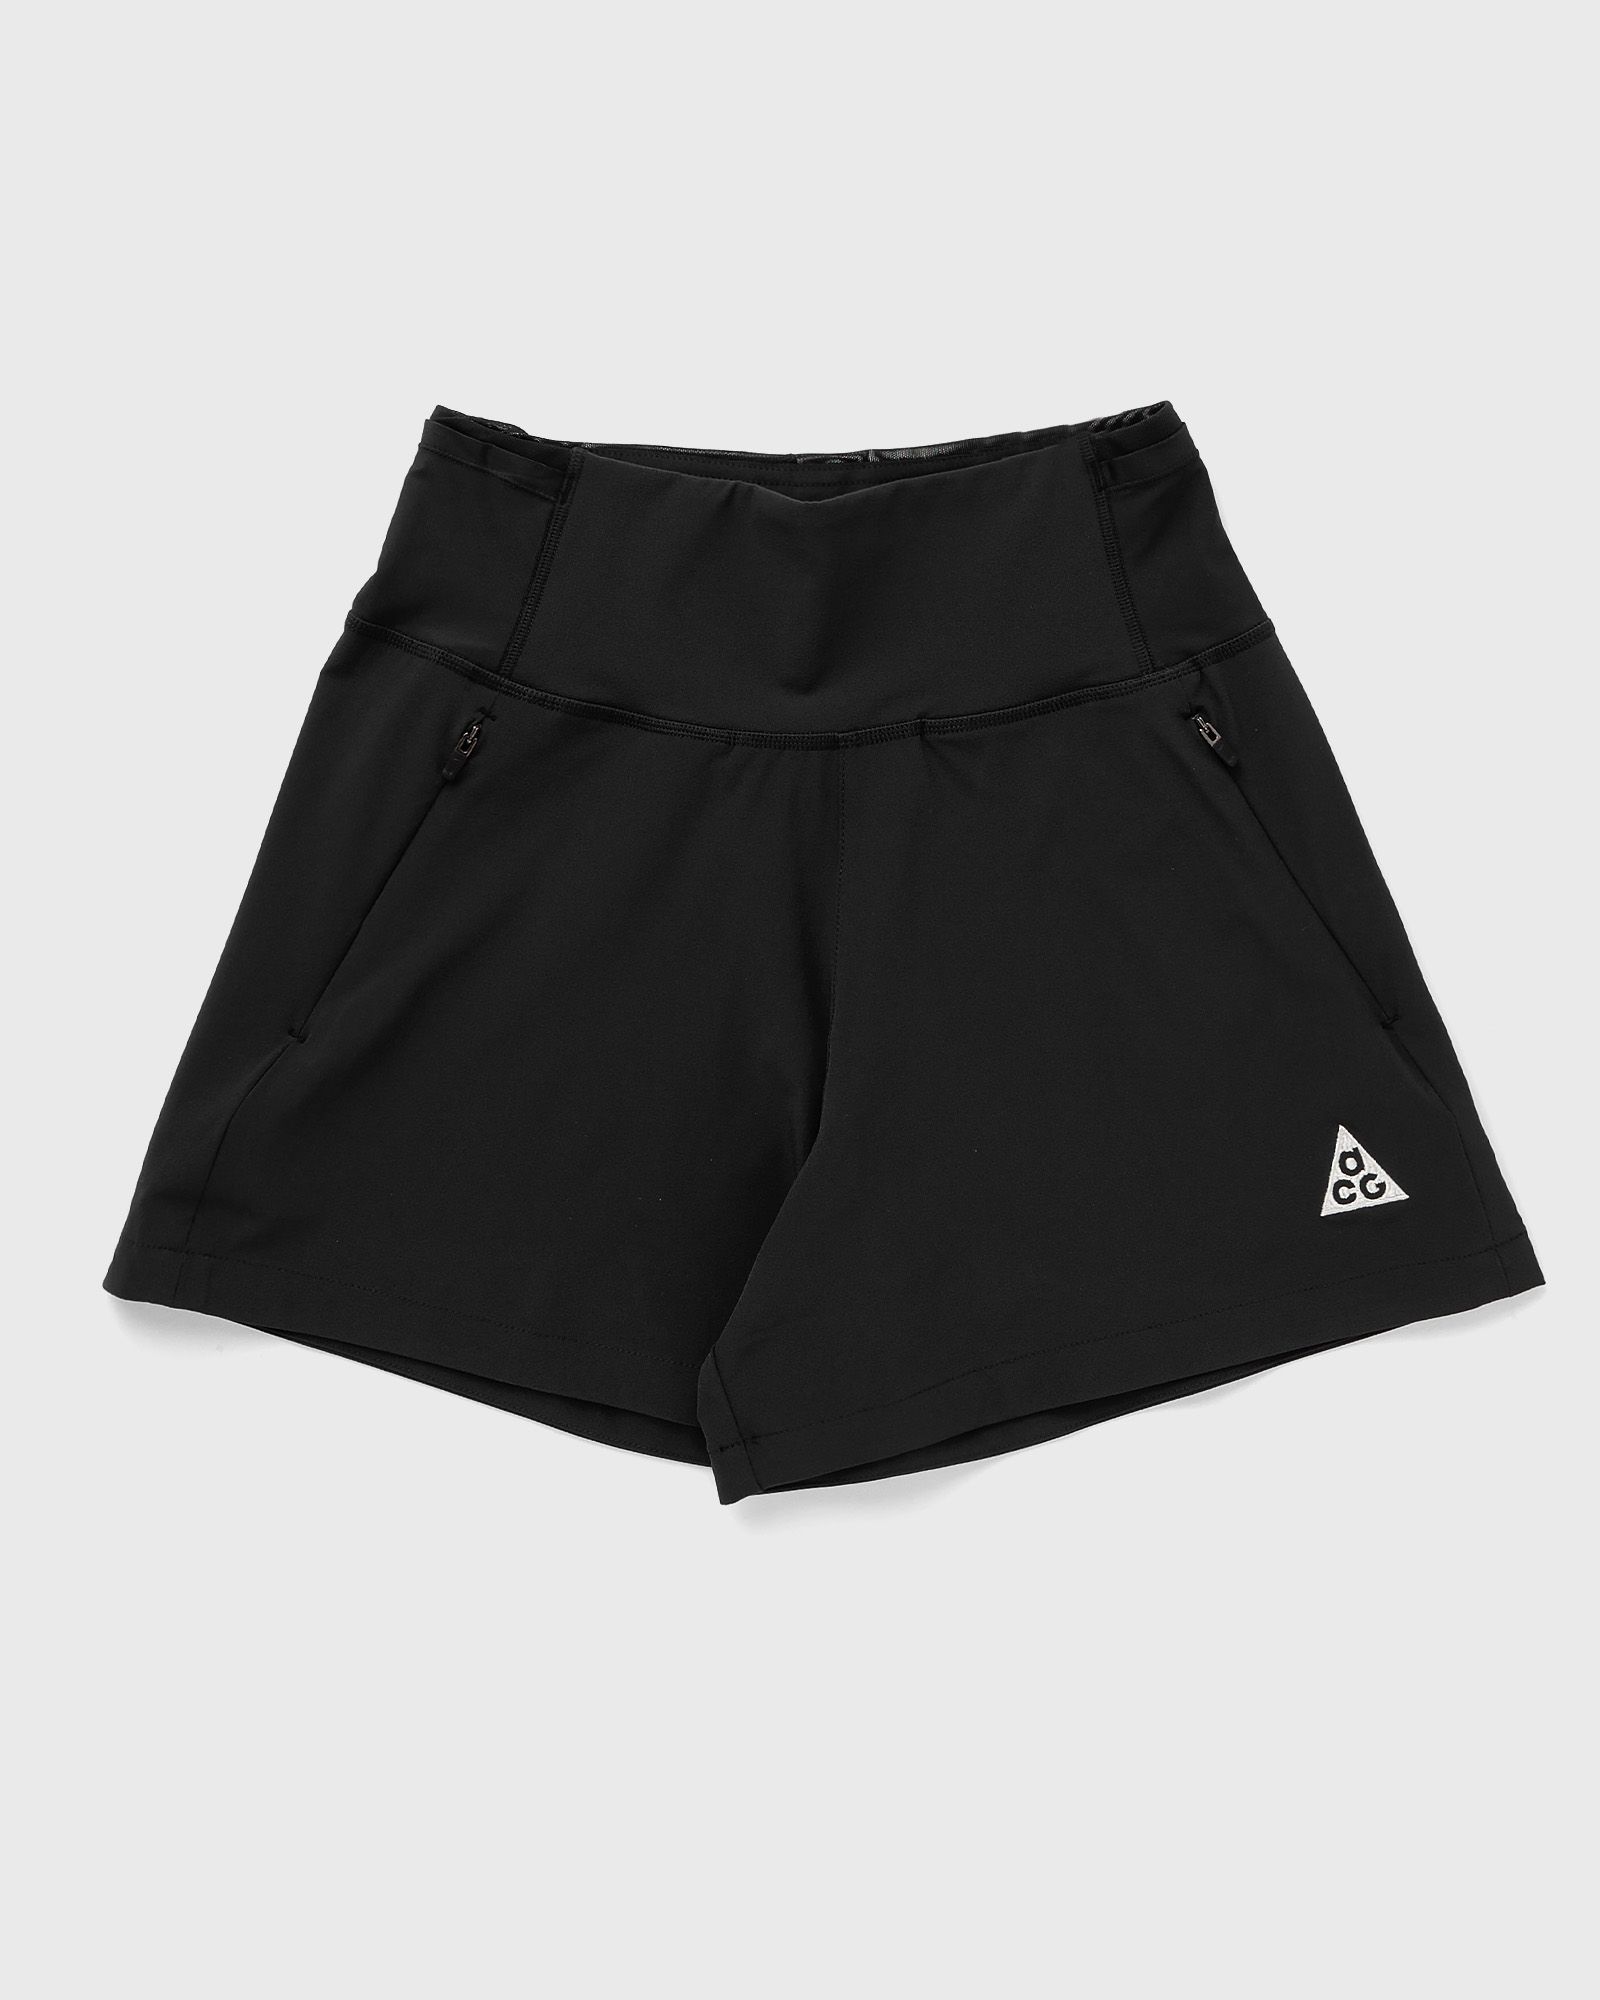 Nike - w acg df new sands short women sport & team shorts black in größe:s